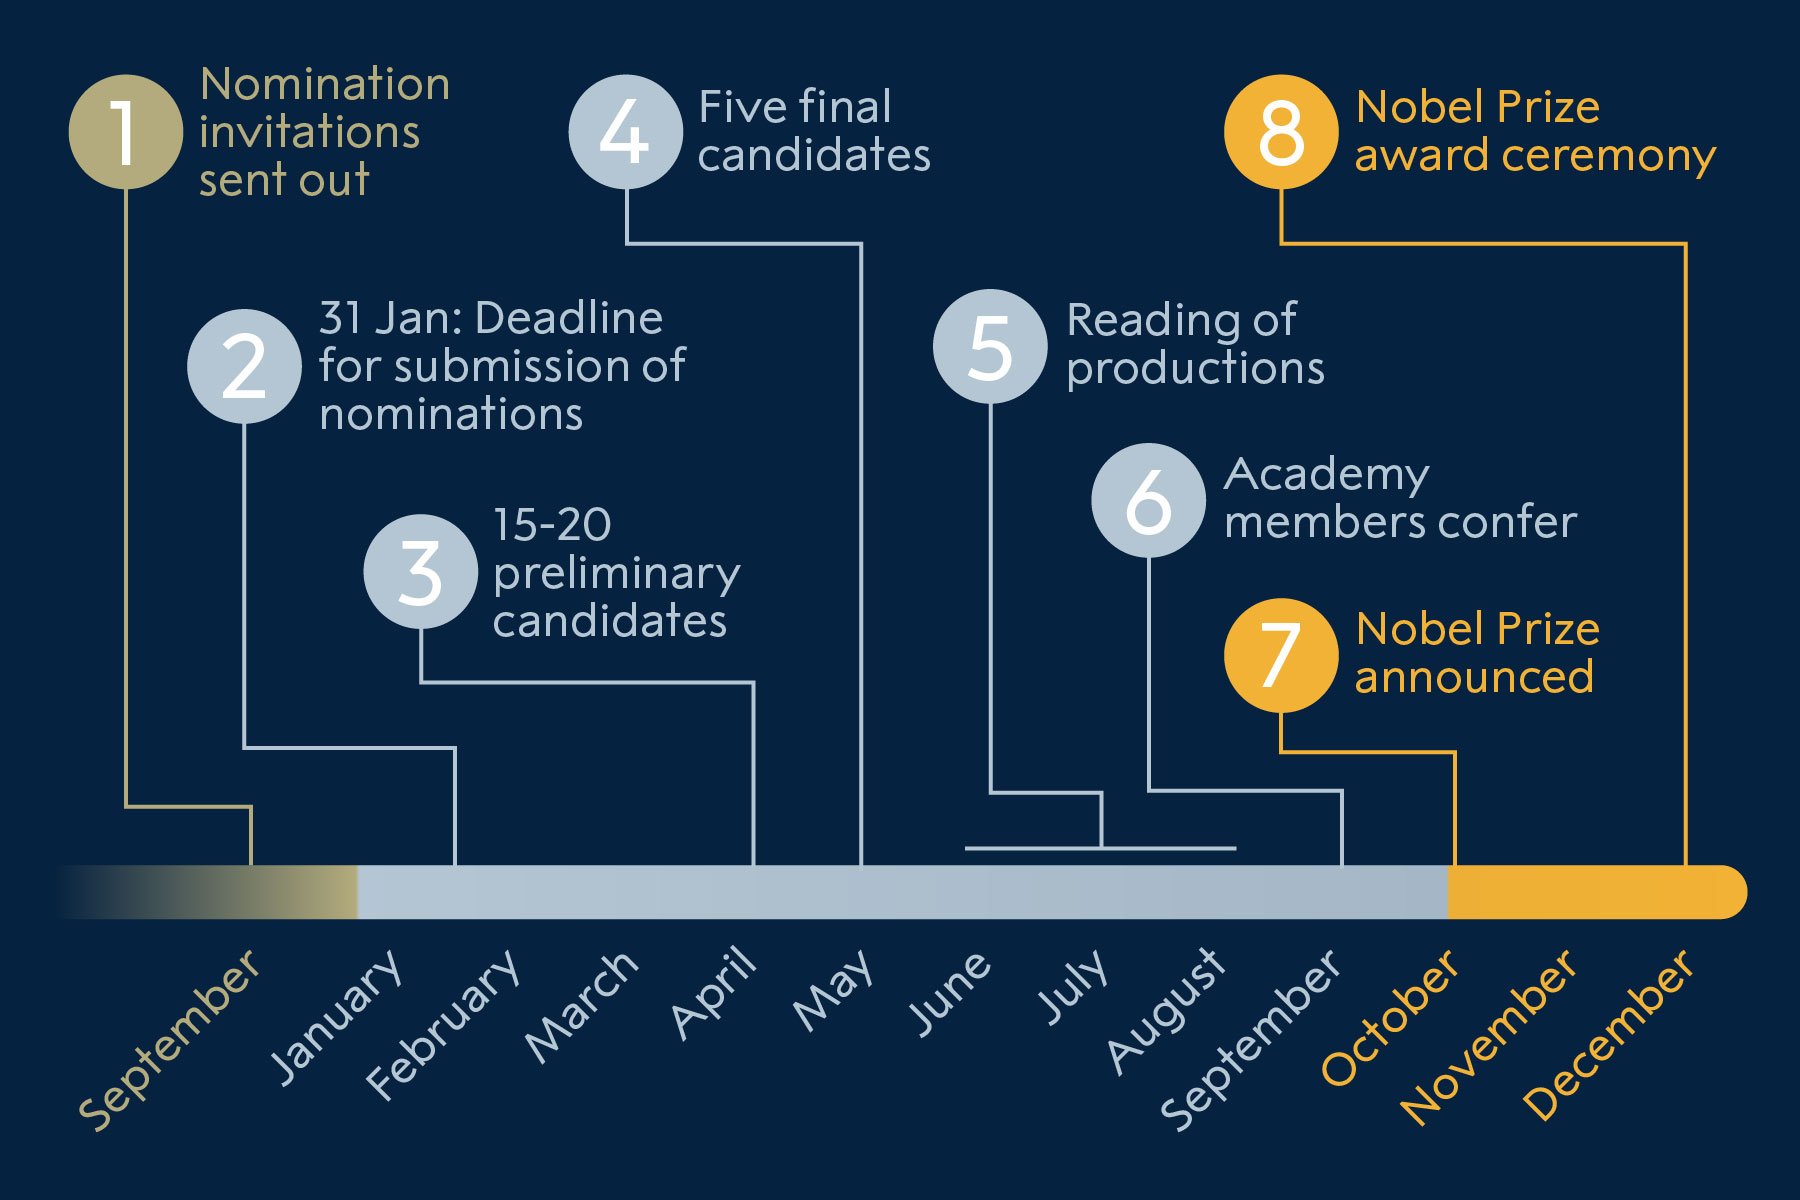 The nomination process for Nobel Laureates in Literature